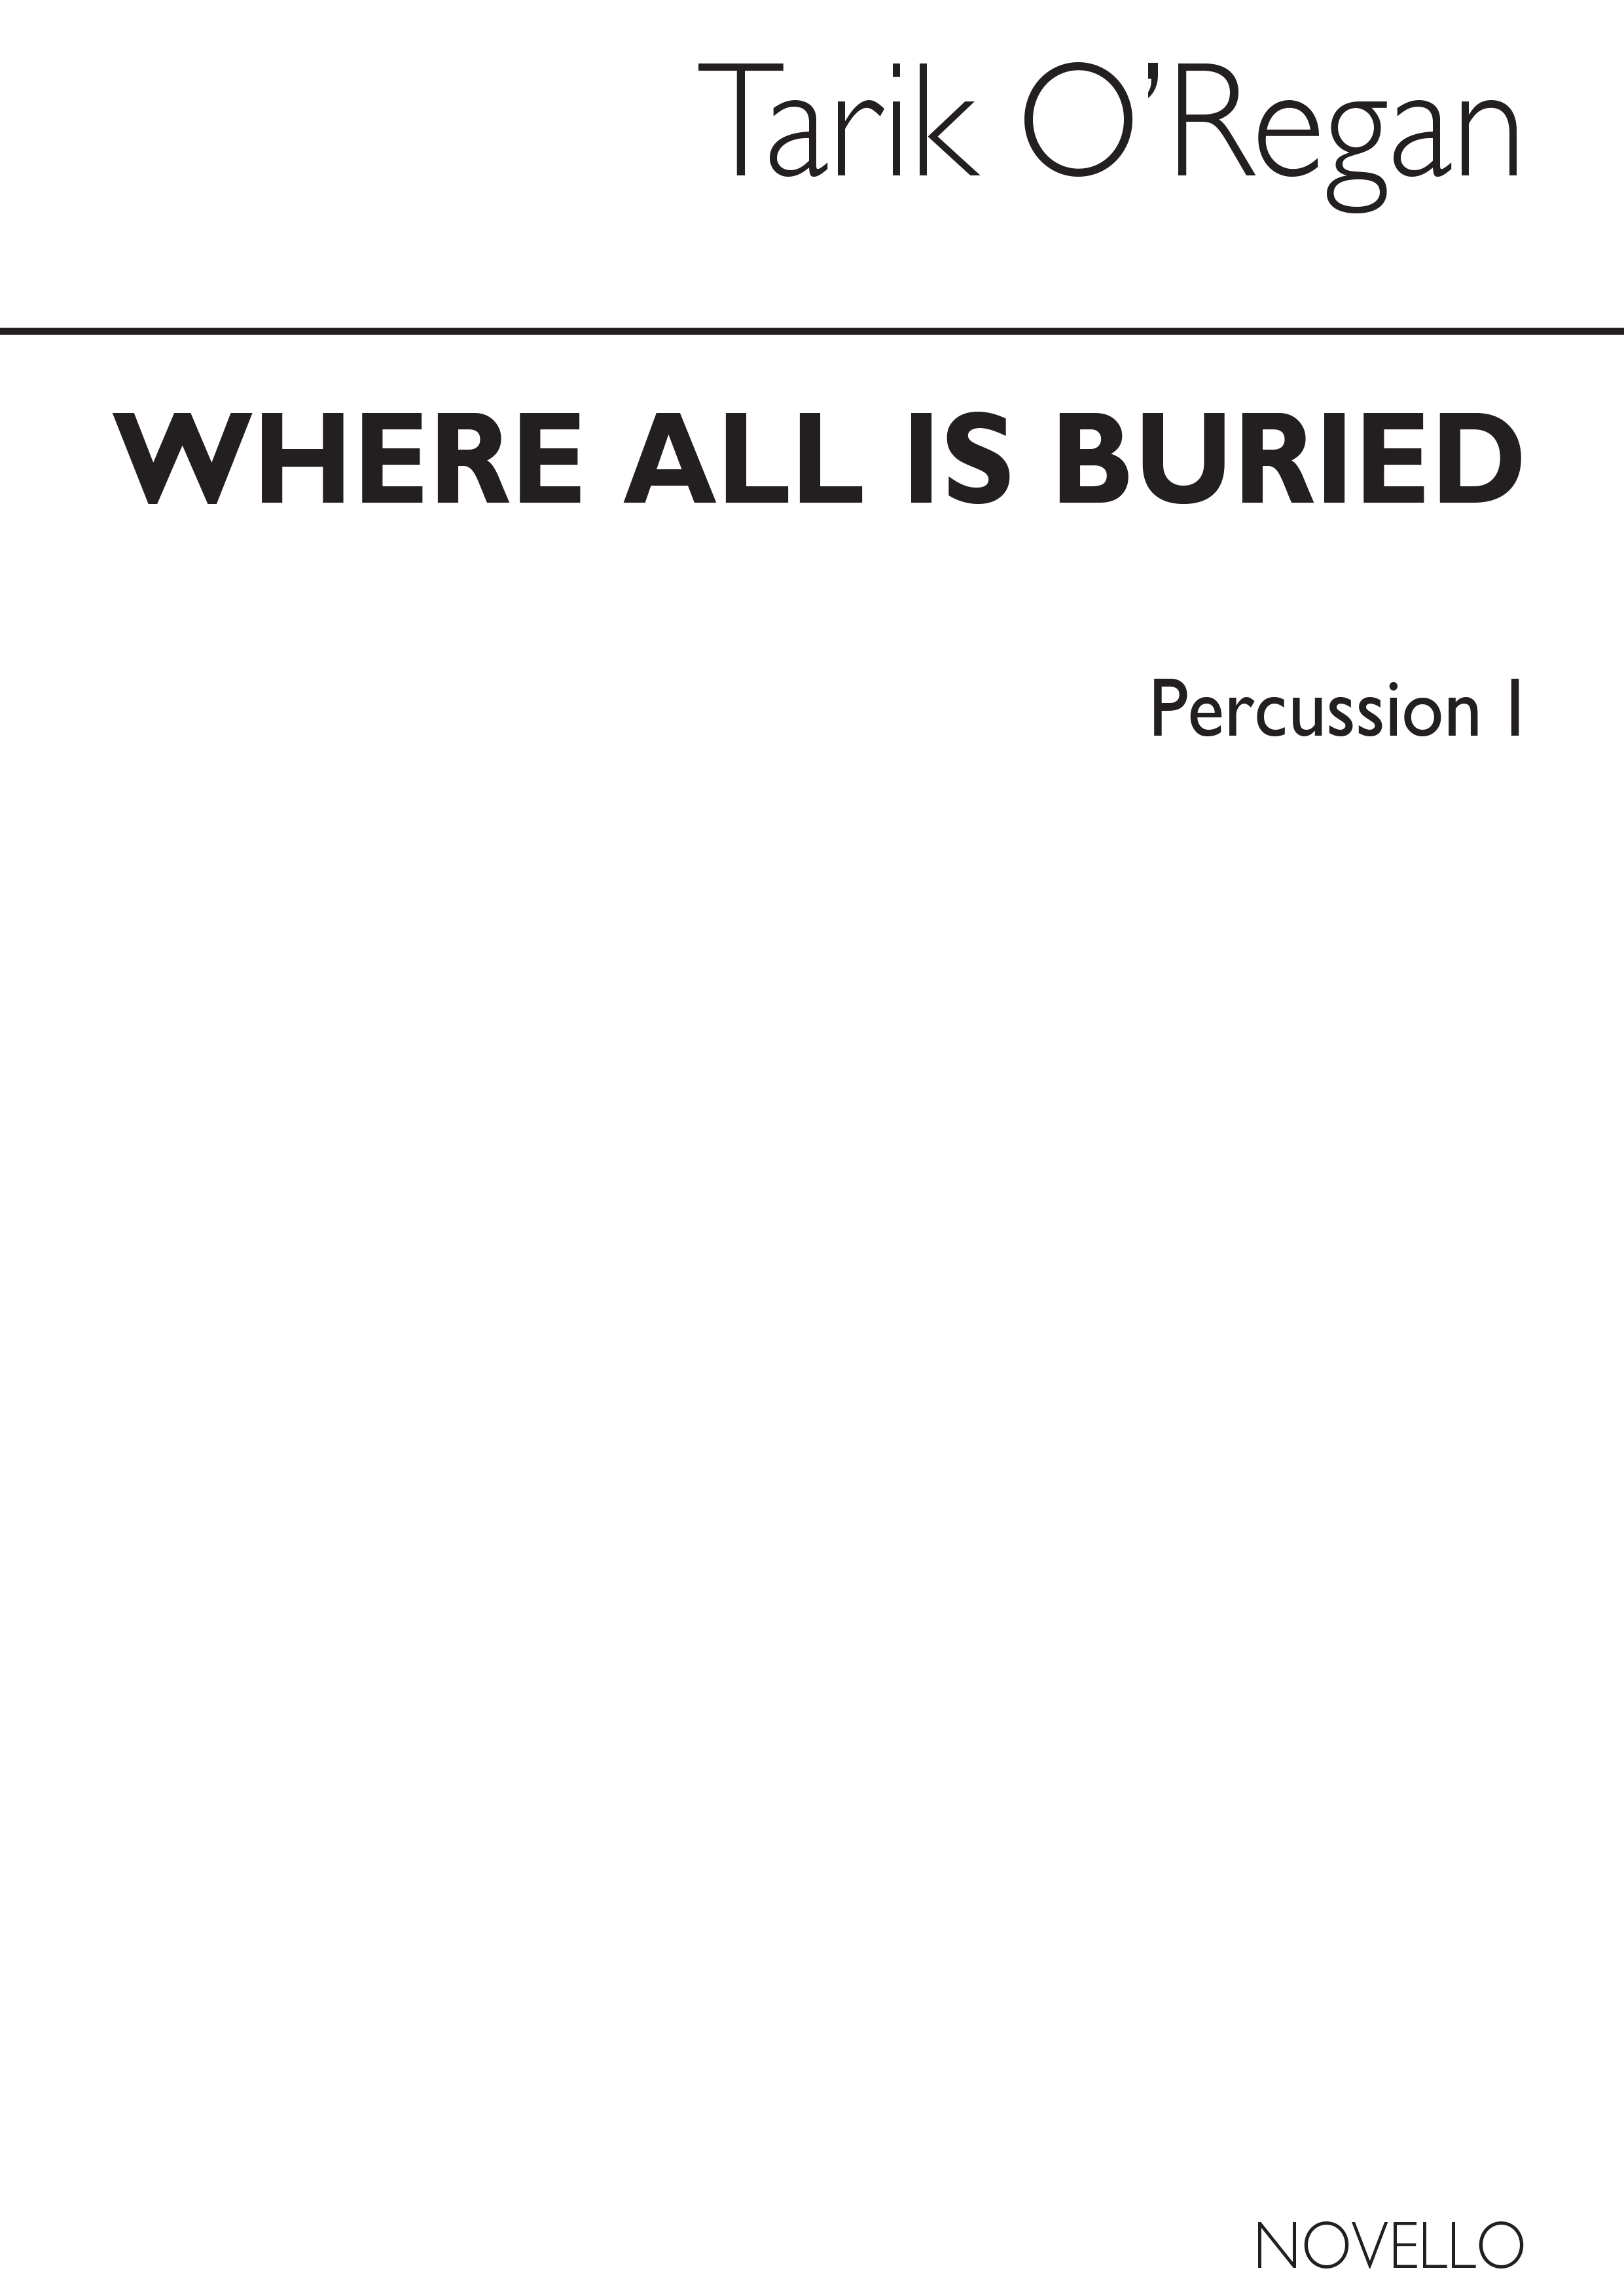 Tarik O'Regan: Where All Is Buried (Percussion Parts)